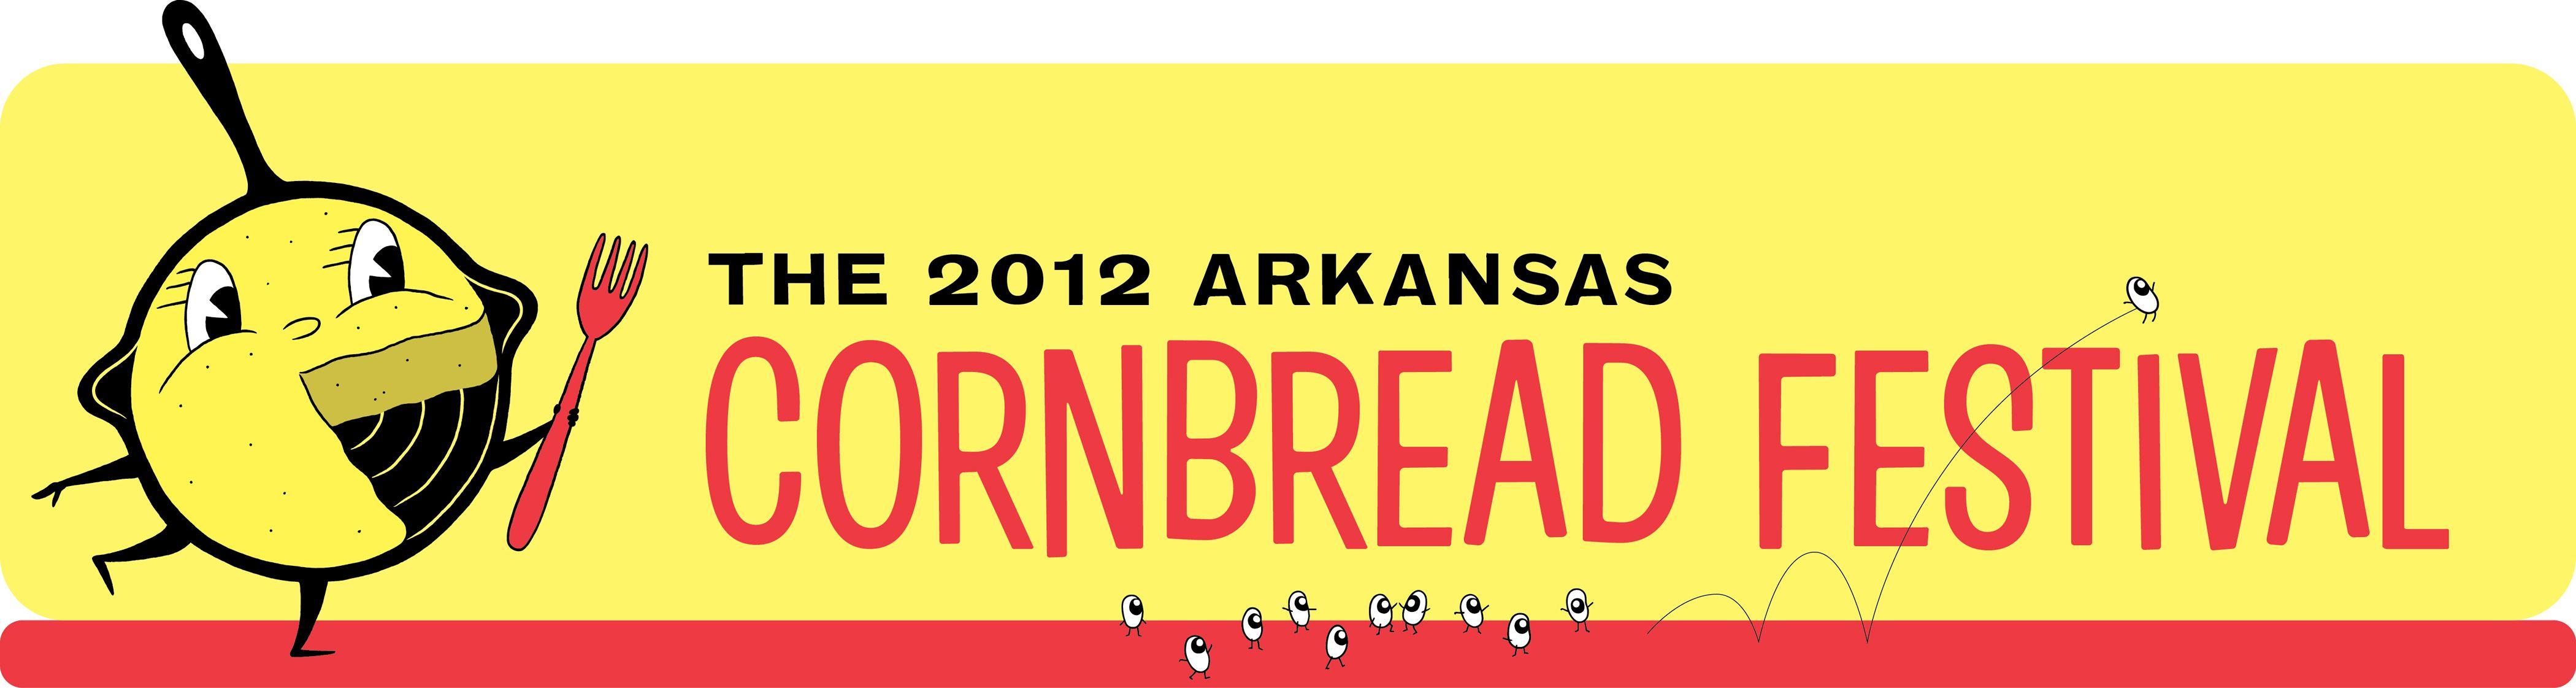 Cornbread Logo - Arkansas Cornbread Festival Cooks Up New Logo, Website | What Have ...